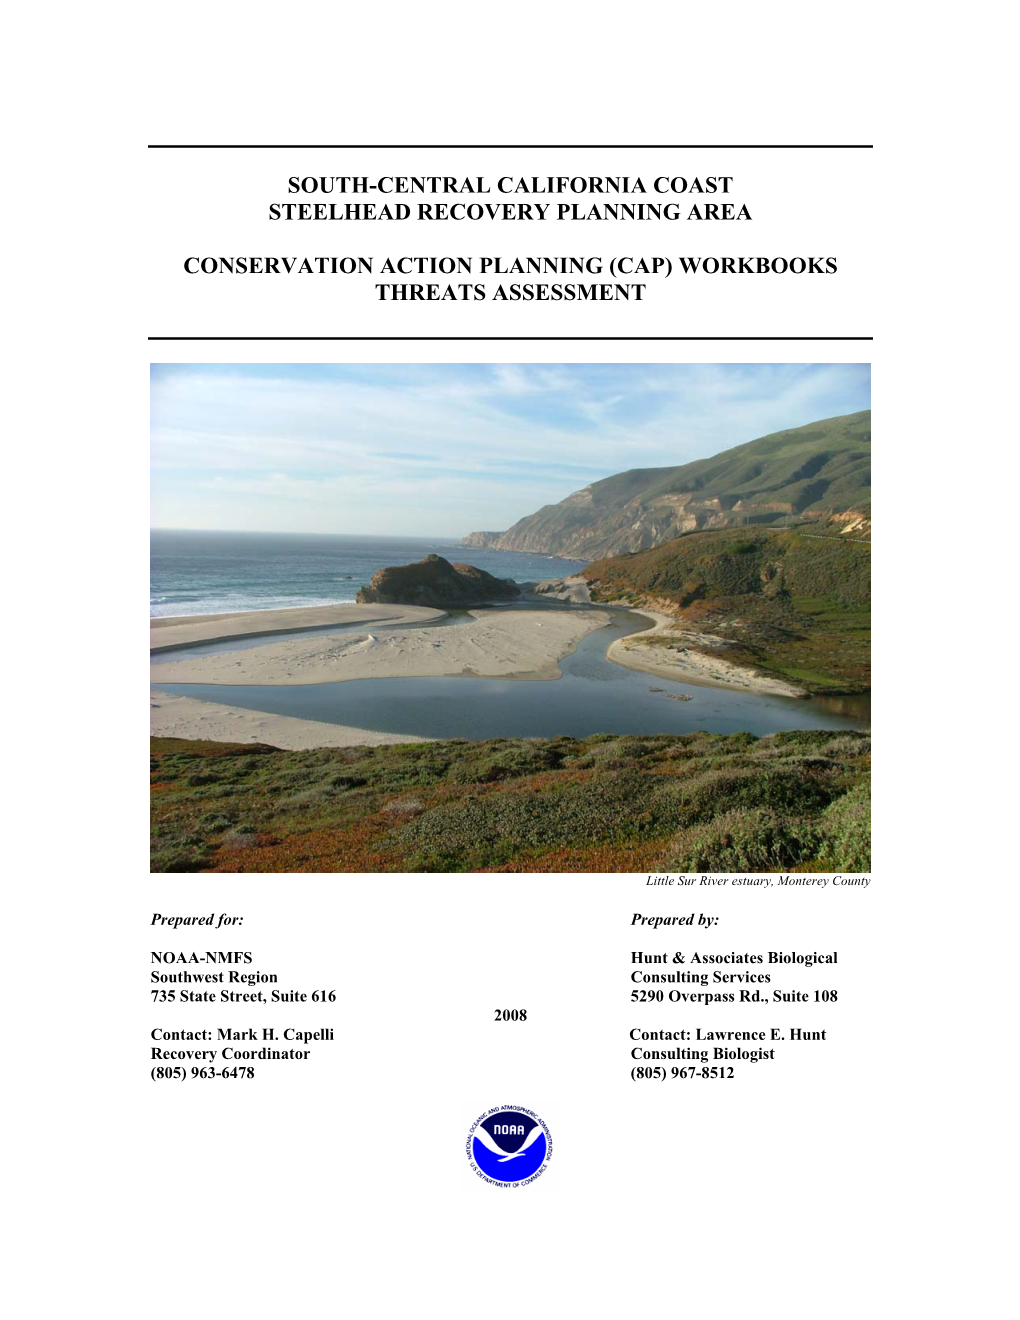 South-Central California Coast Steelhead Recovery Planning Area